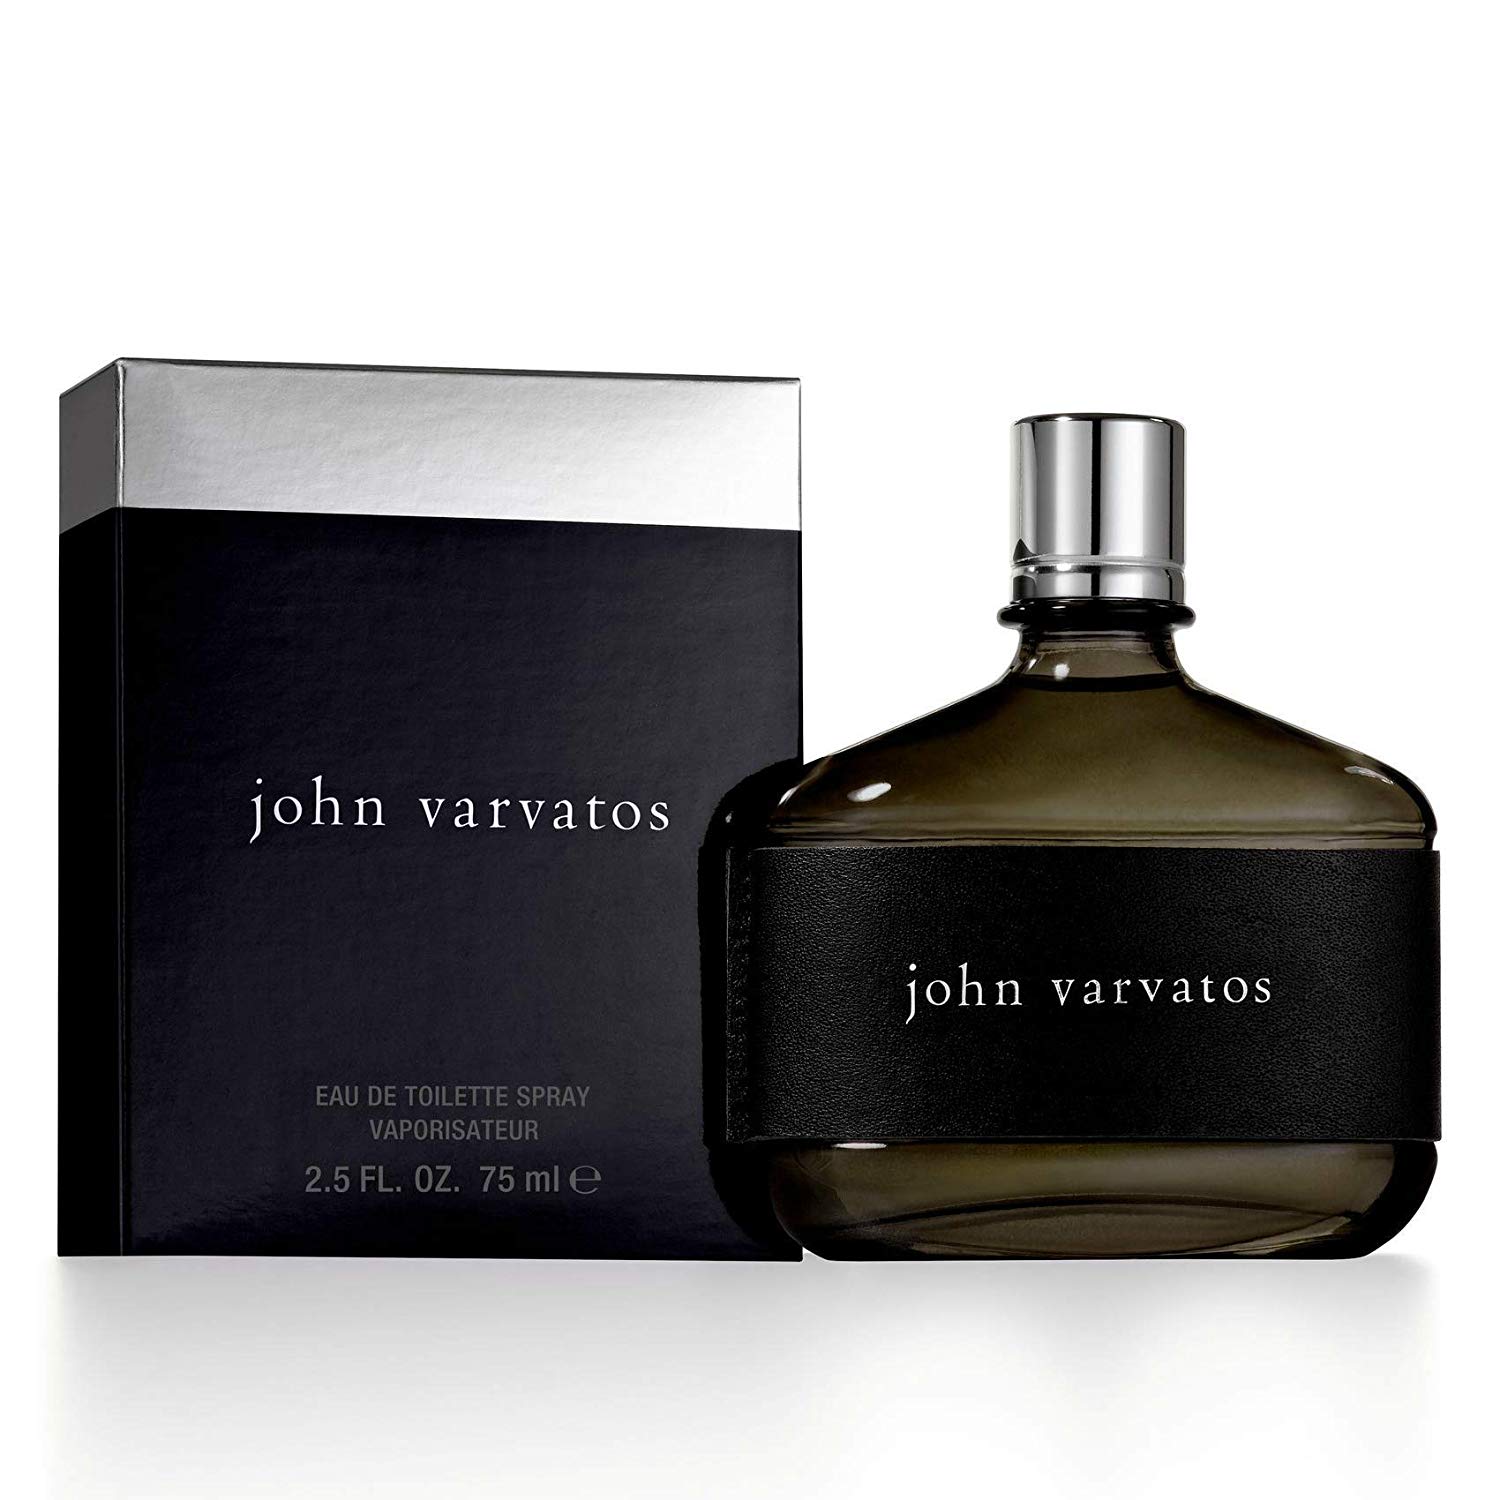 Perfume John Varvatos solo 25,1€